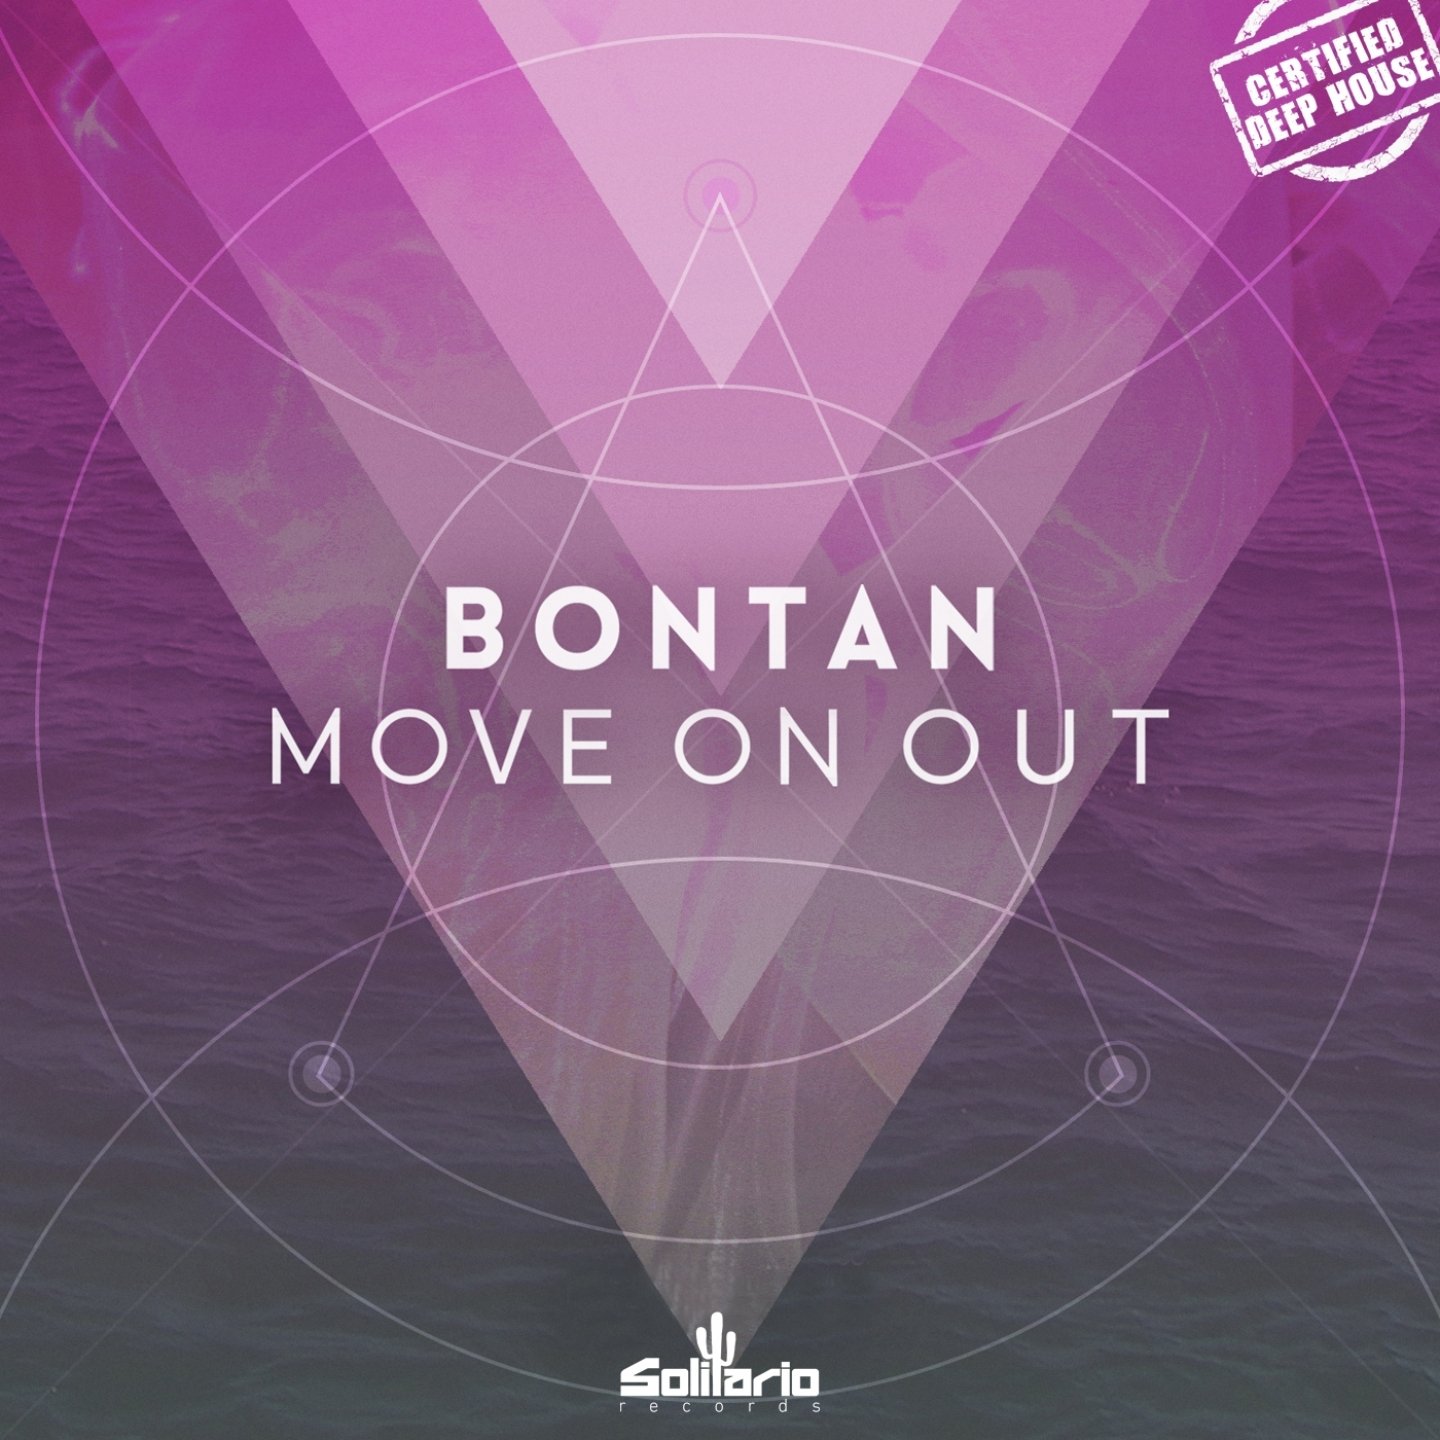 Move on. Bontan. Move out обложка. On the move. Надпись move on.